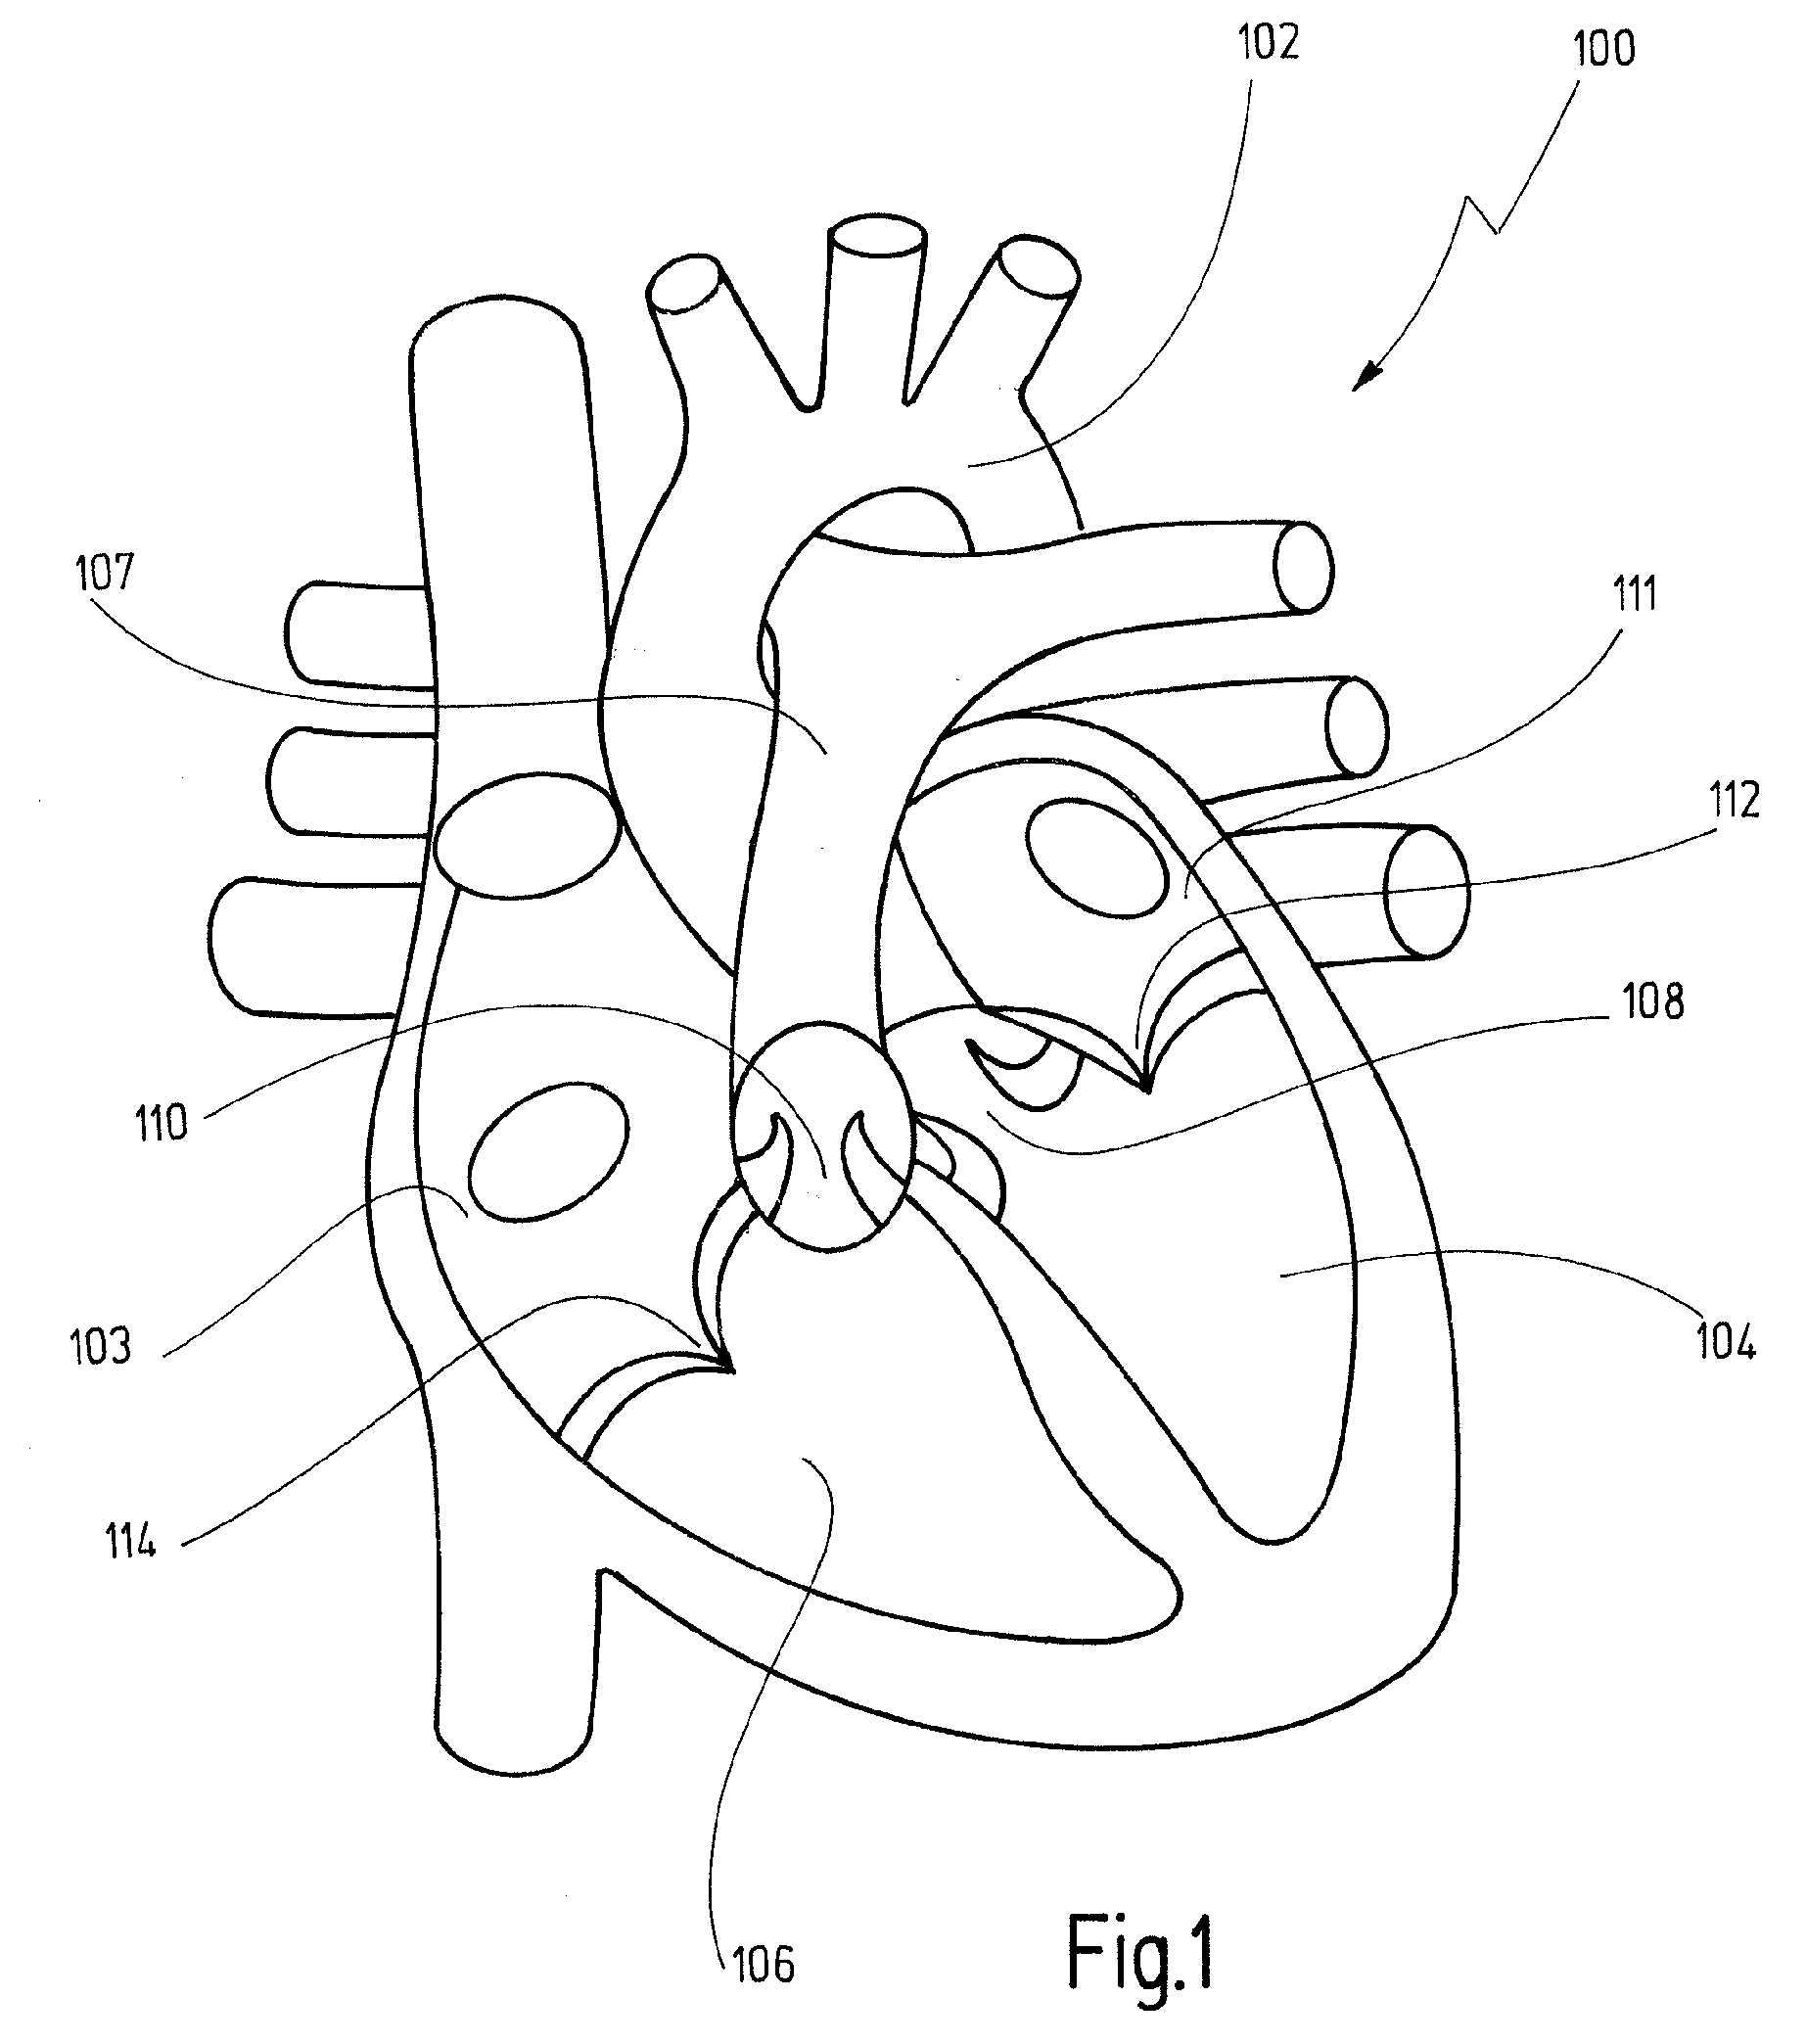 Cardiac valve prosthesis system